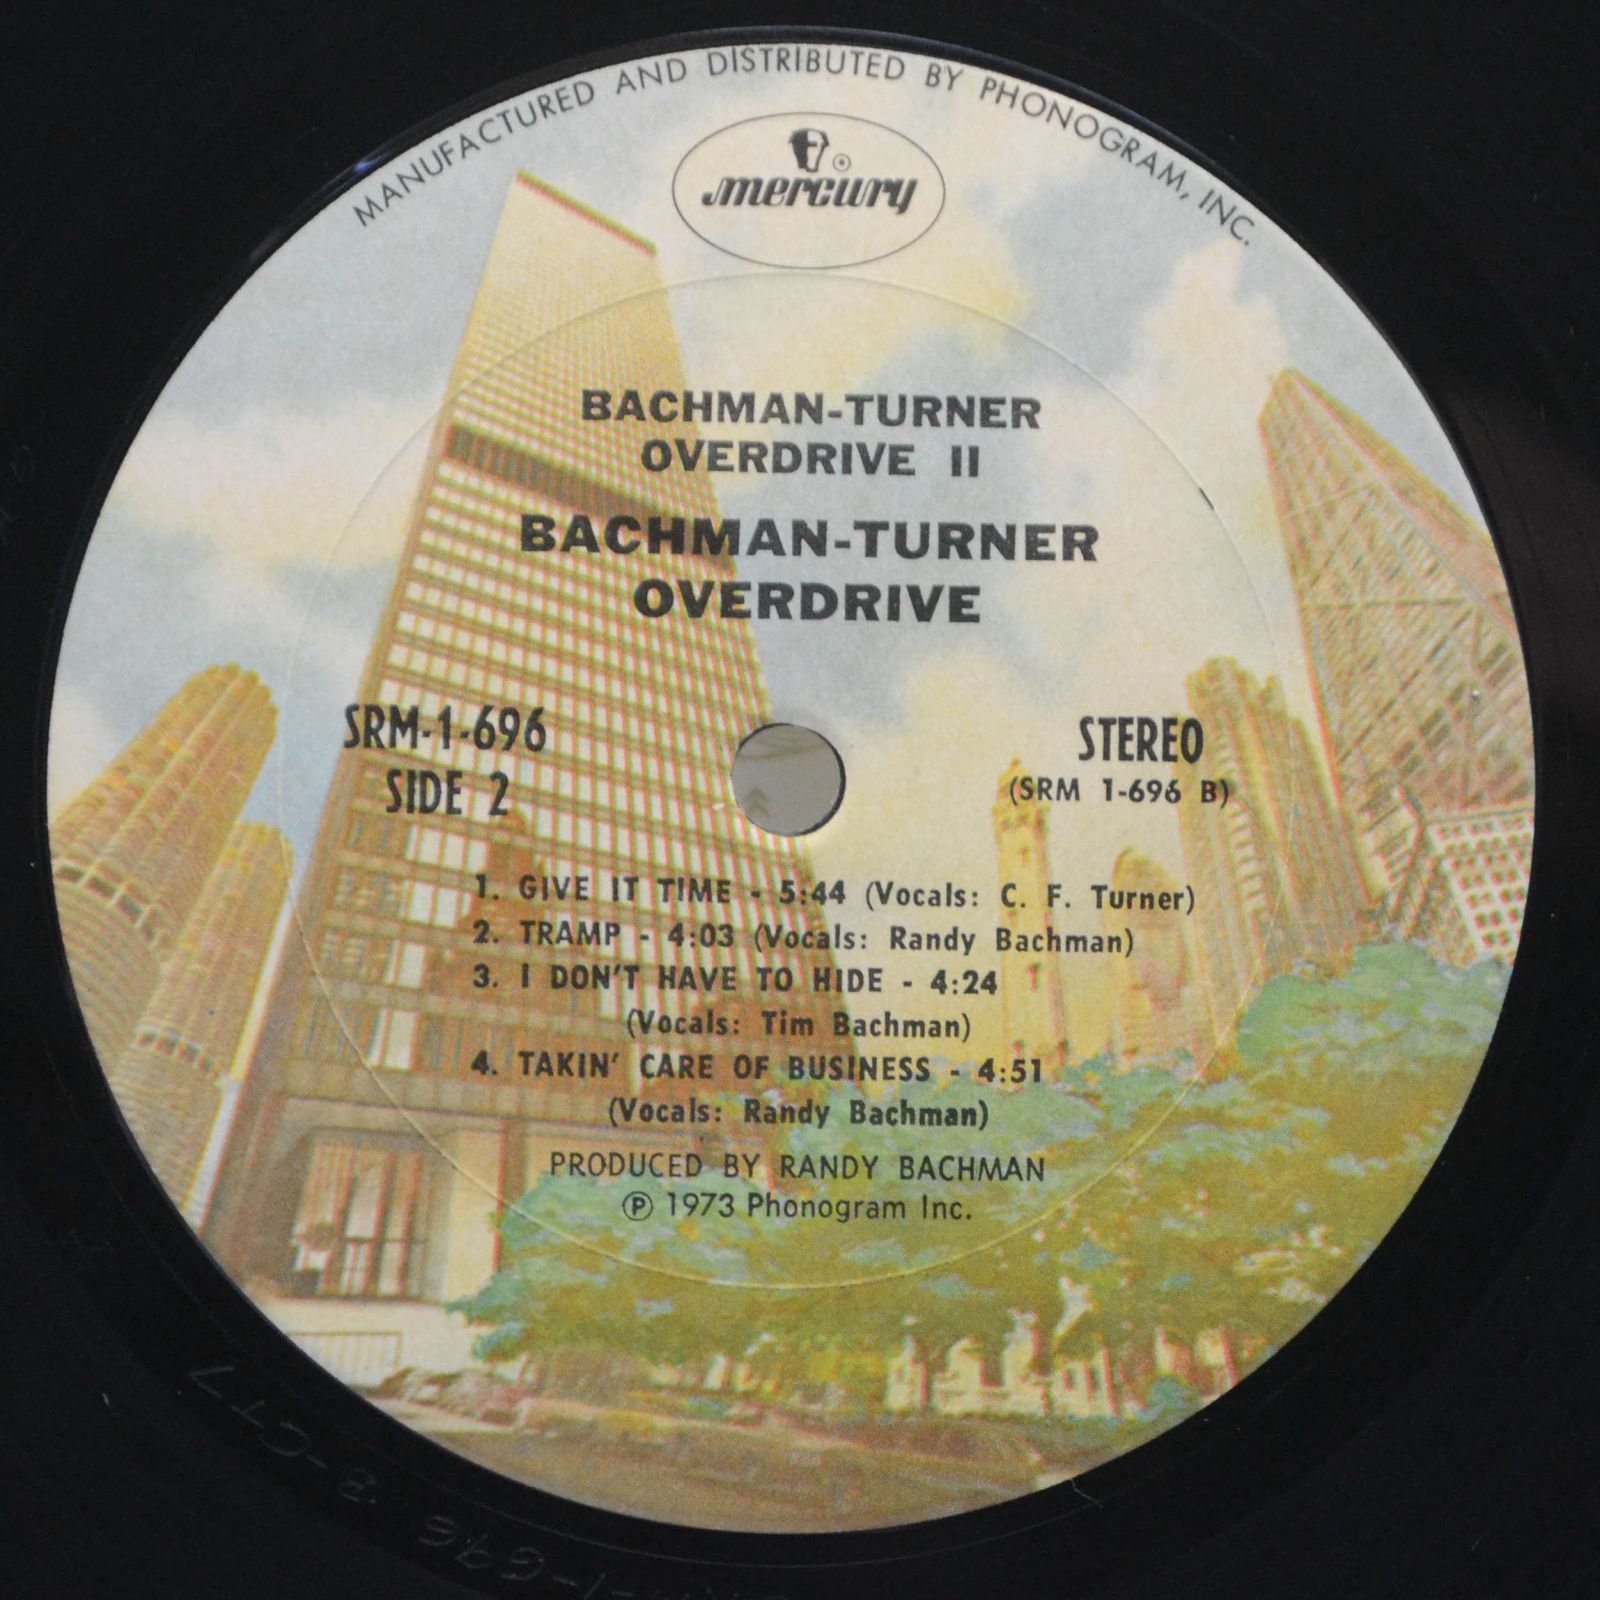 Bachman-Turner Overdrive — Bachman-Turner Overdrive II (USA), 1973